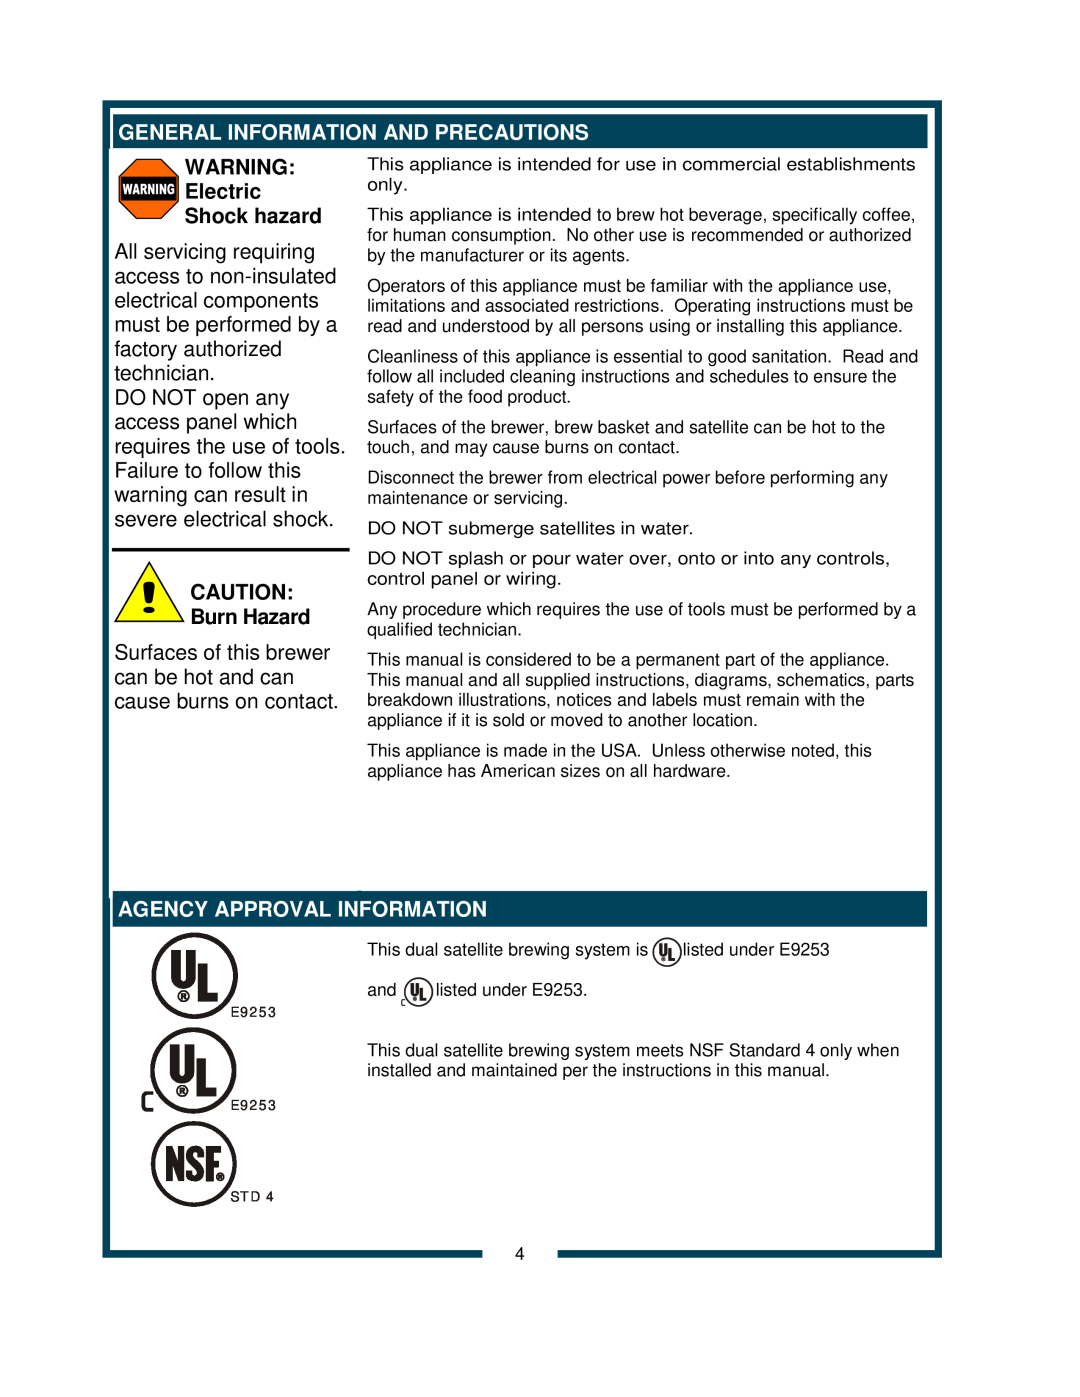 Bloomfield 9220 9221 owner manual General Information And Precautions, WARNING Electric Shock hazard, Burn Hazard 